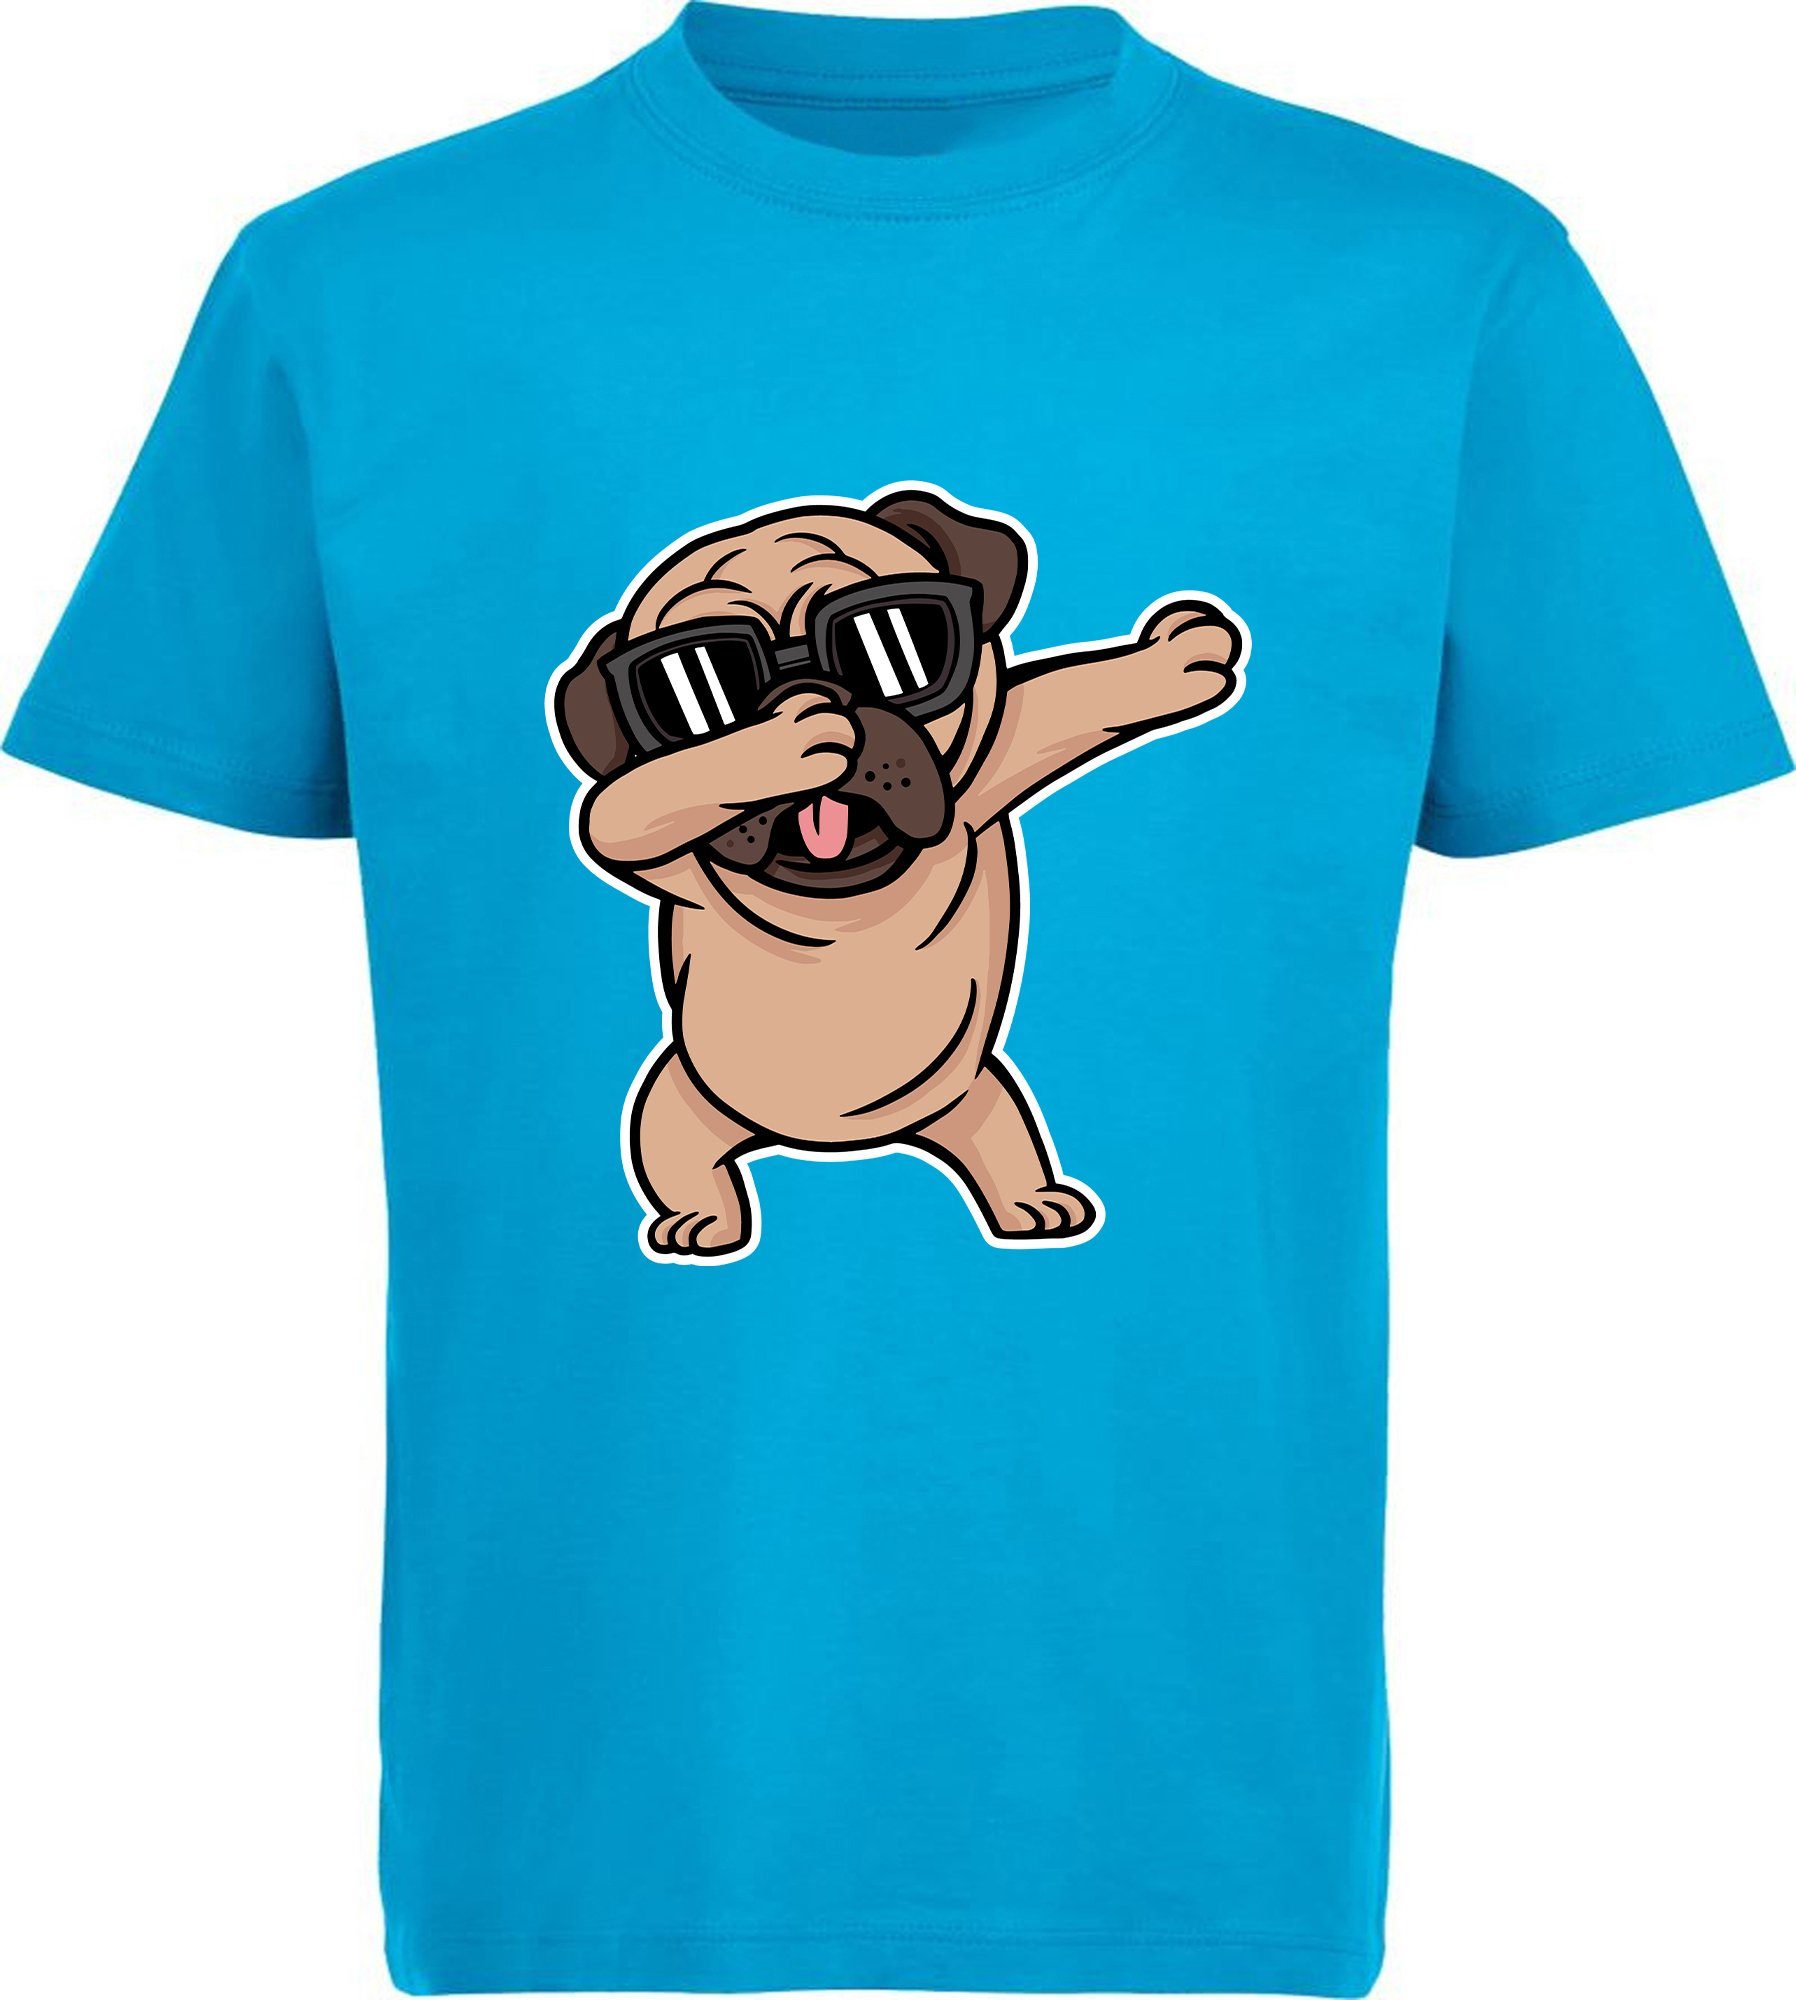 MyDesign24 Print-Shirt Kinder T-Shirt dab bedruckt i238 blau - Baumwollshirt mit Aufdruck, Hund tanzender Hunde aqua